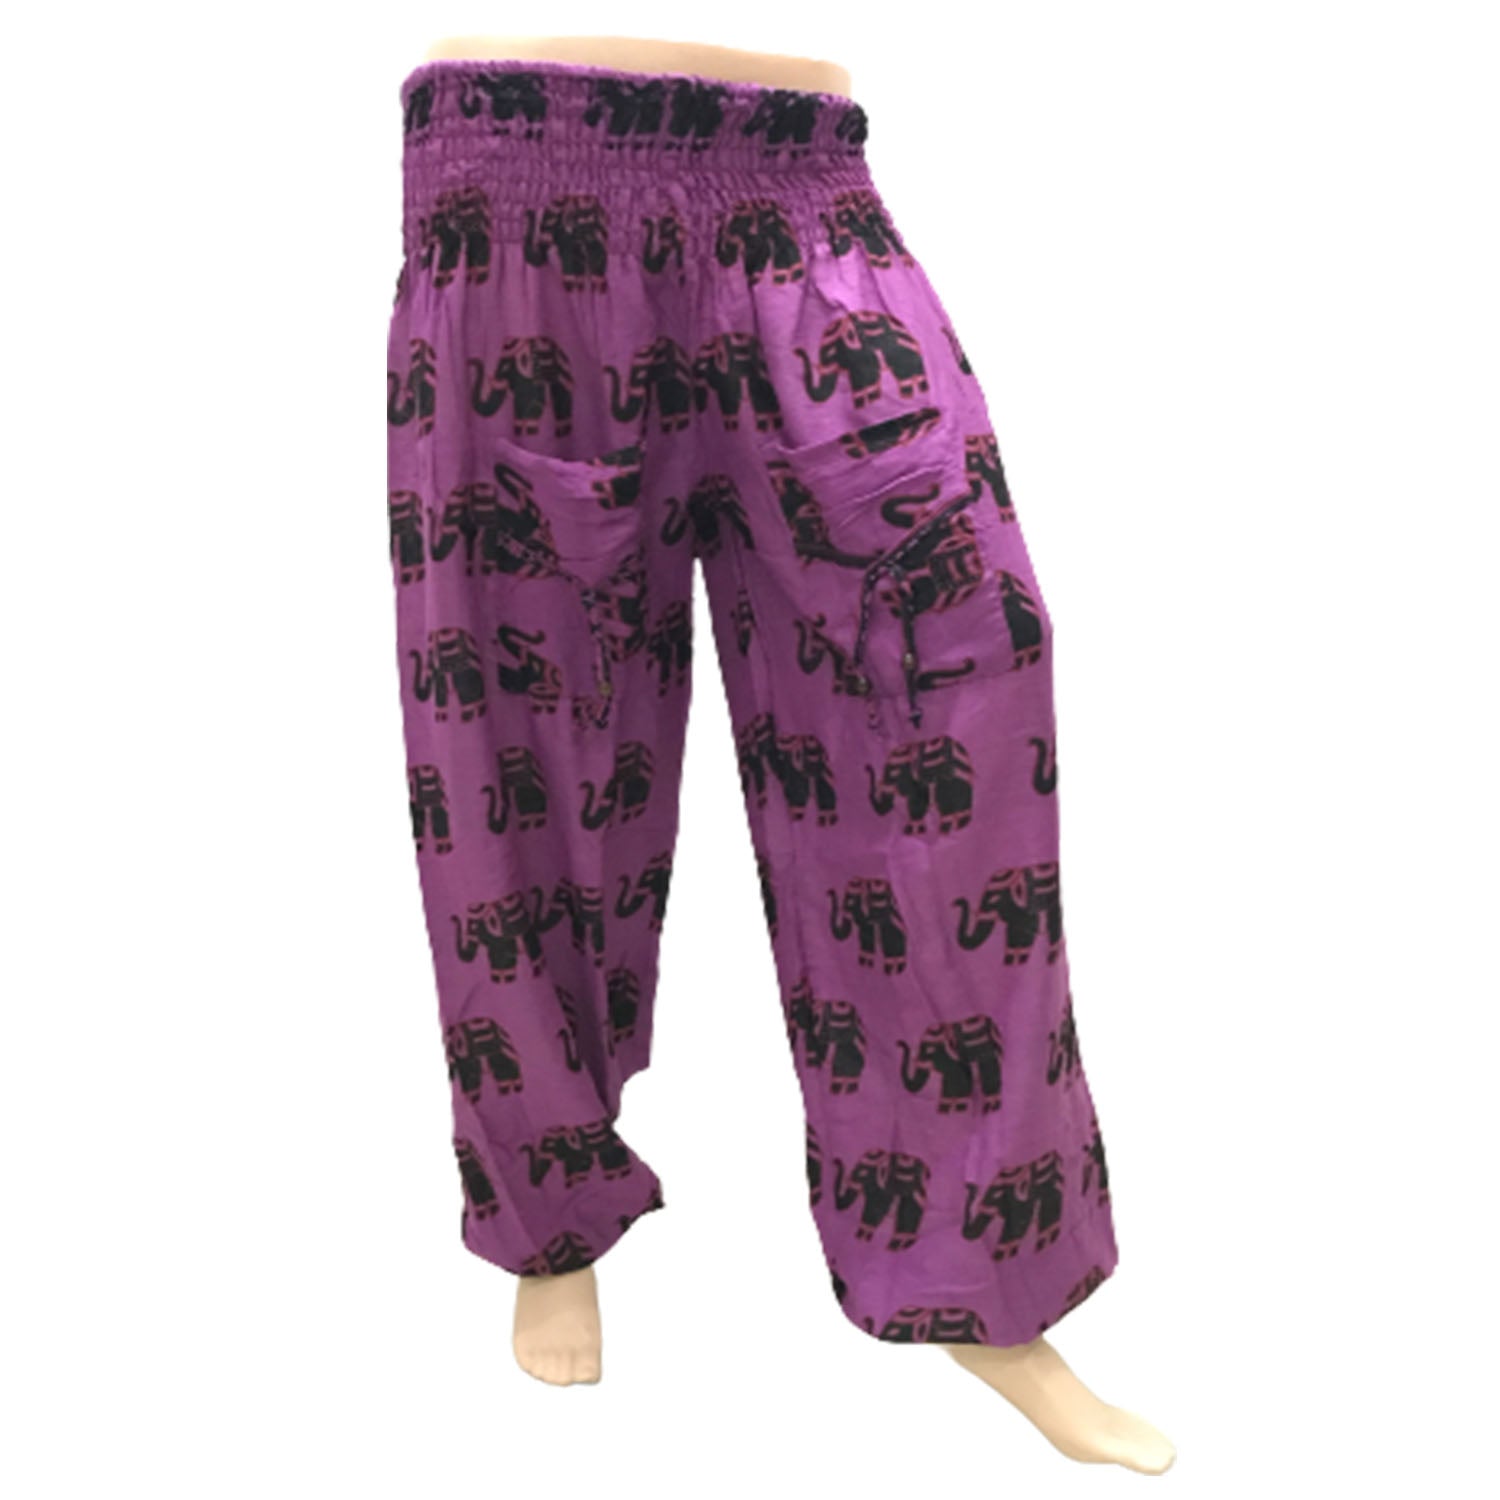 Ganesha Handicrafts, Cuffed Elephant Print Casual Trousers, Cuffed Casual Trousers, Elephant Print Trousers, Pink colour Cuffed Elephant Print Casual Trousers.